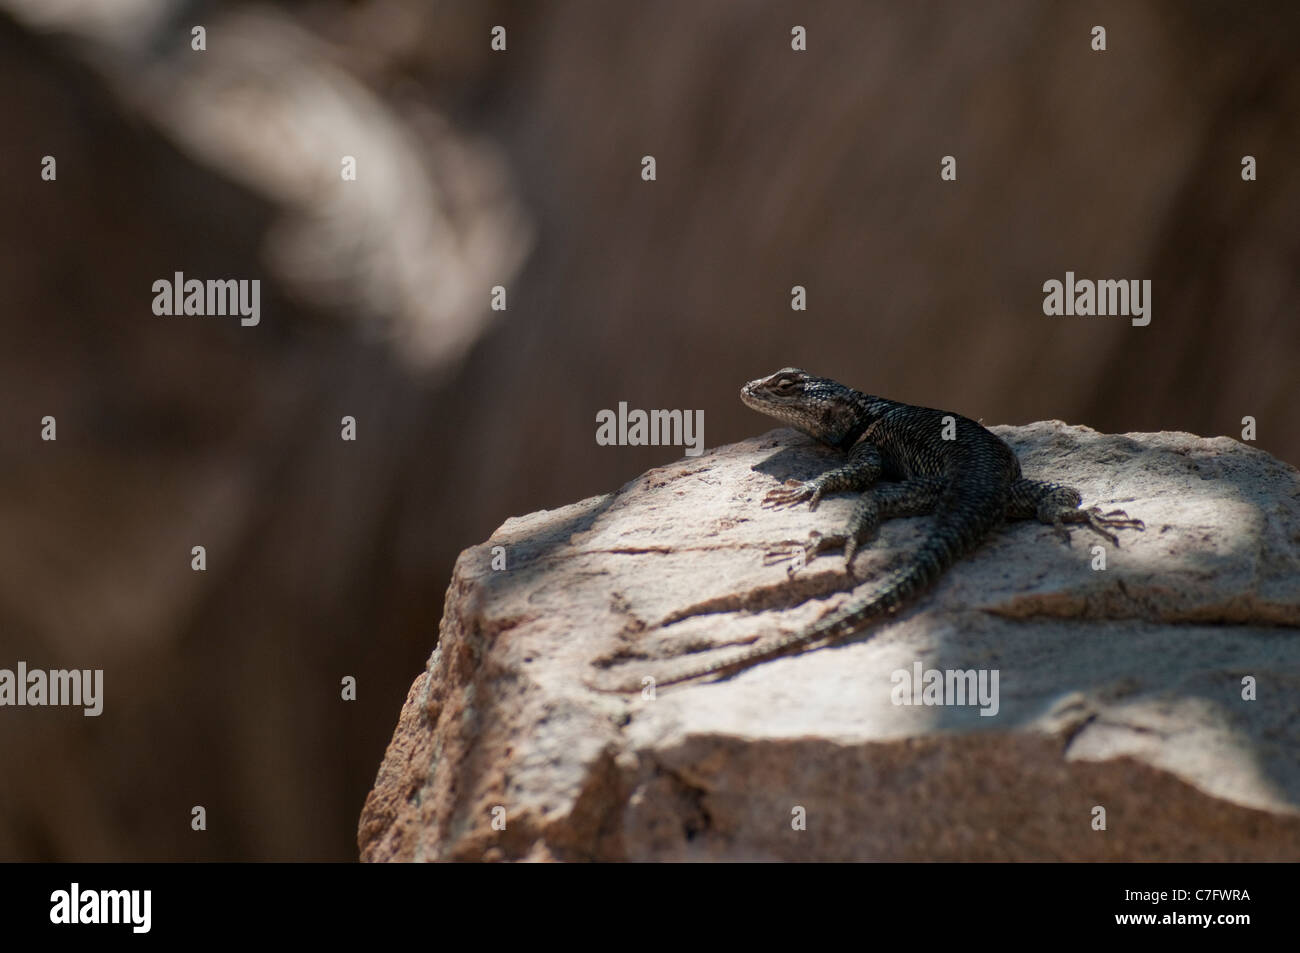 A Yarrow's Spiny Lizard (Sceloporus jarrovii) in Ramsey Canyon Preserve, Arizona, USA. Stock Photo